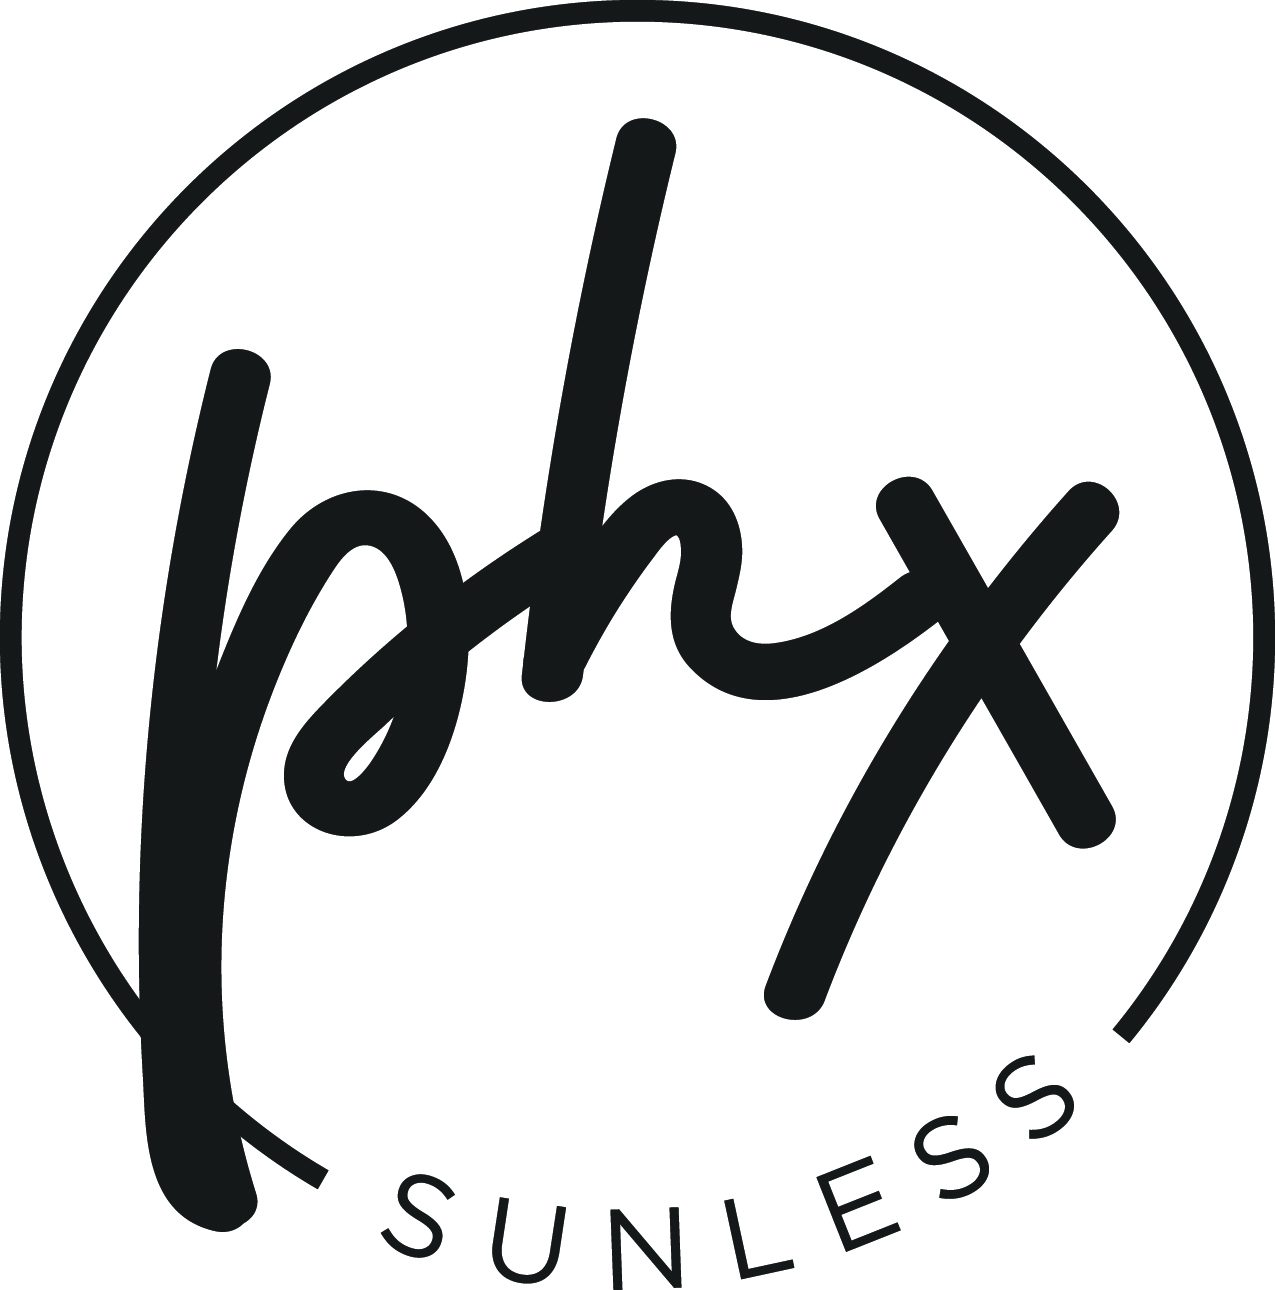 Phx Sunless